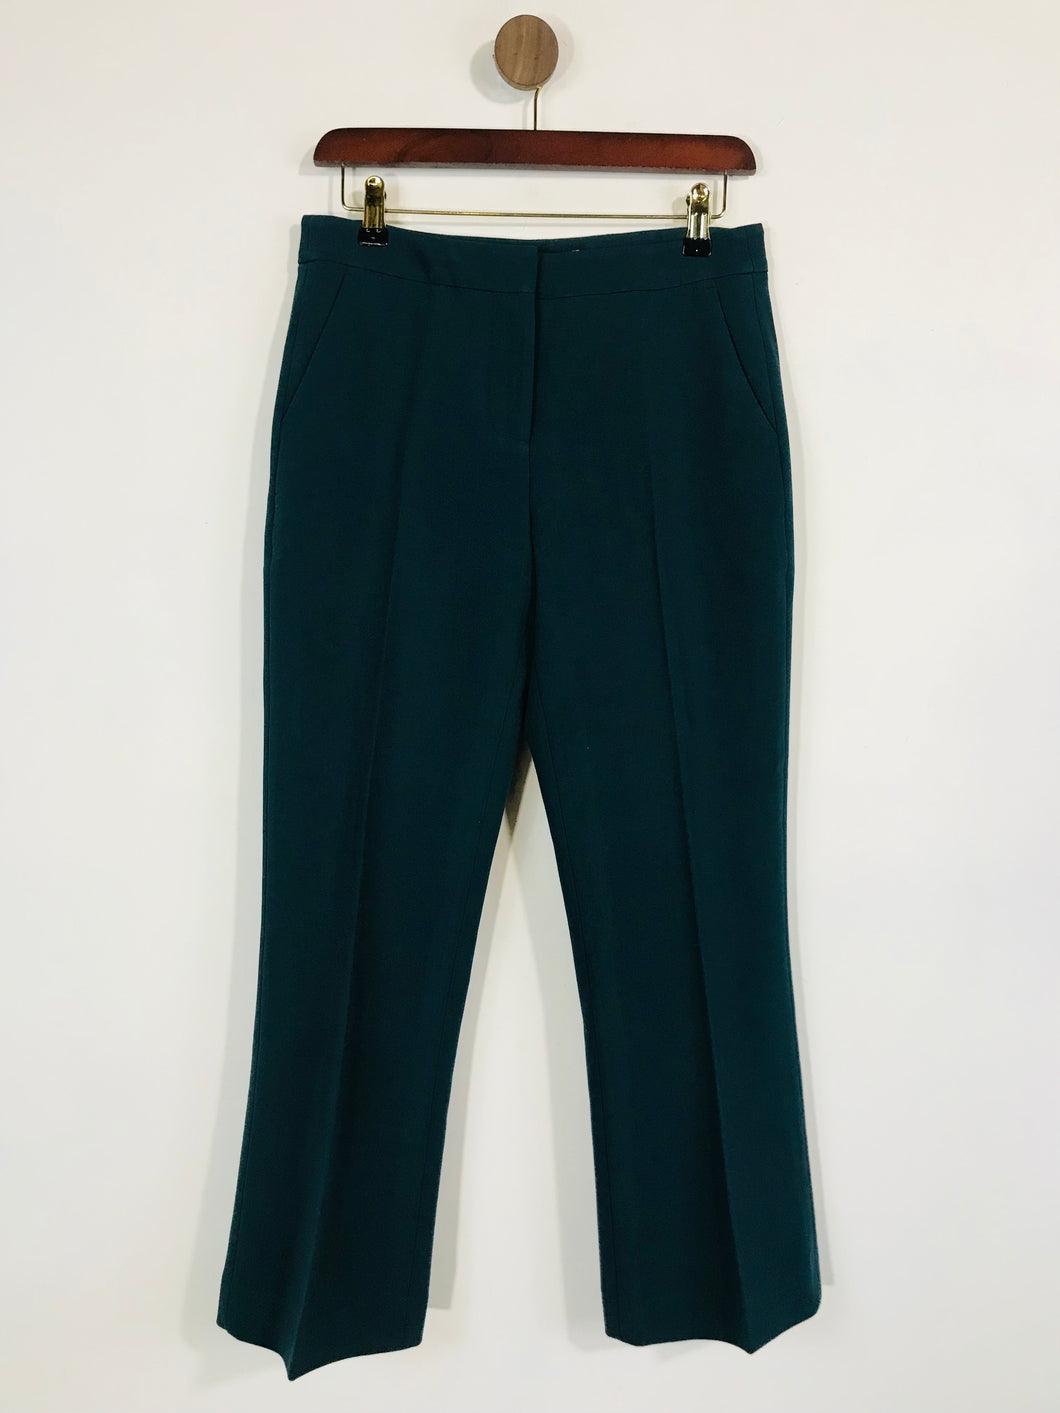 Boden Women's Smart Trousers | UK10 | Green